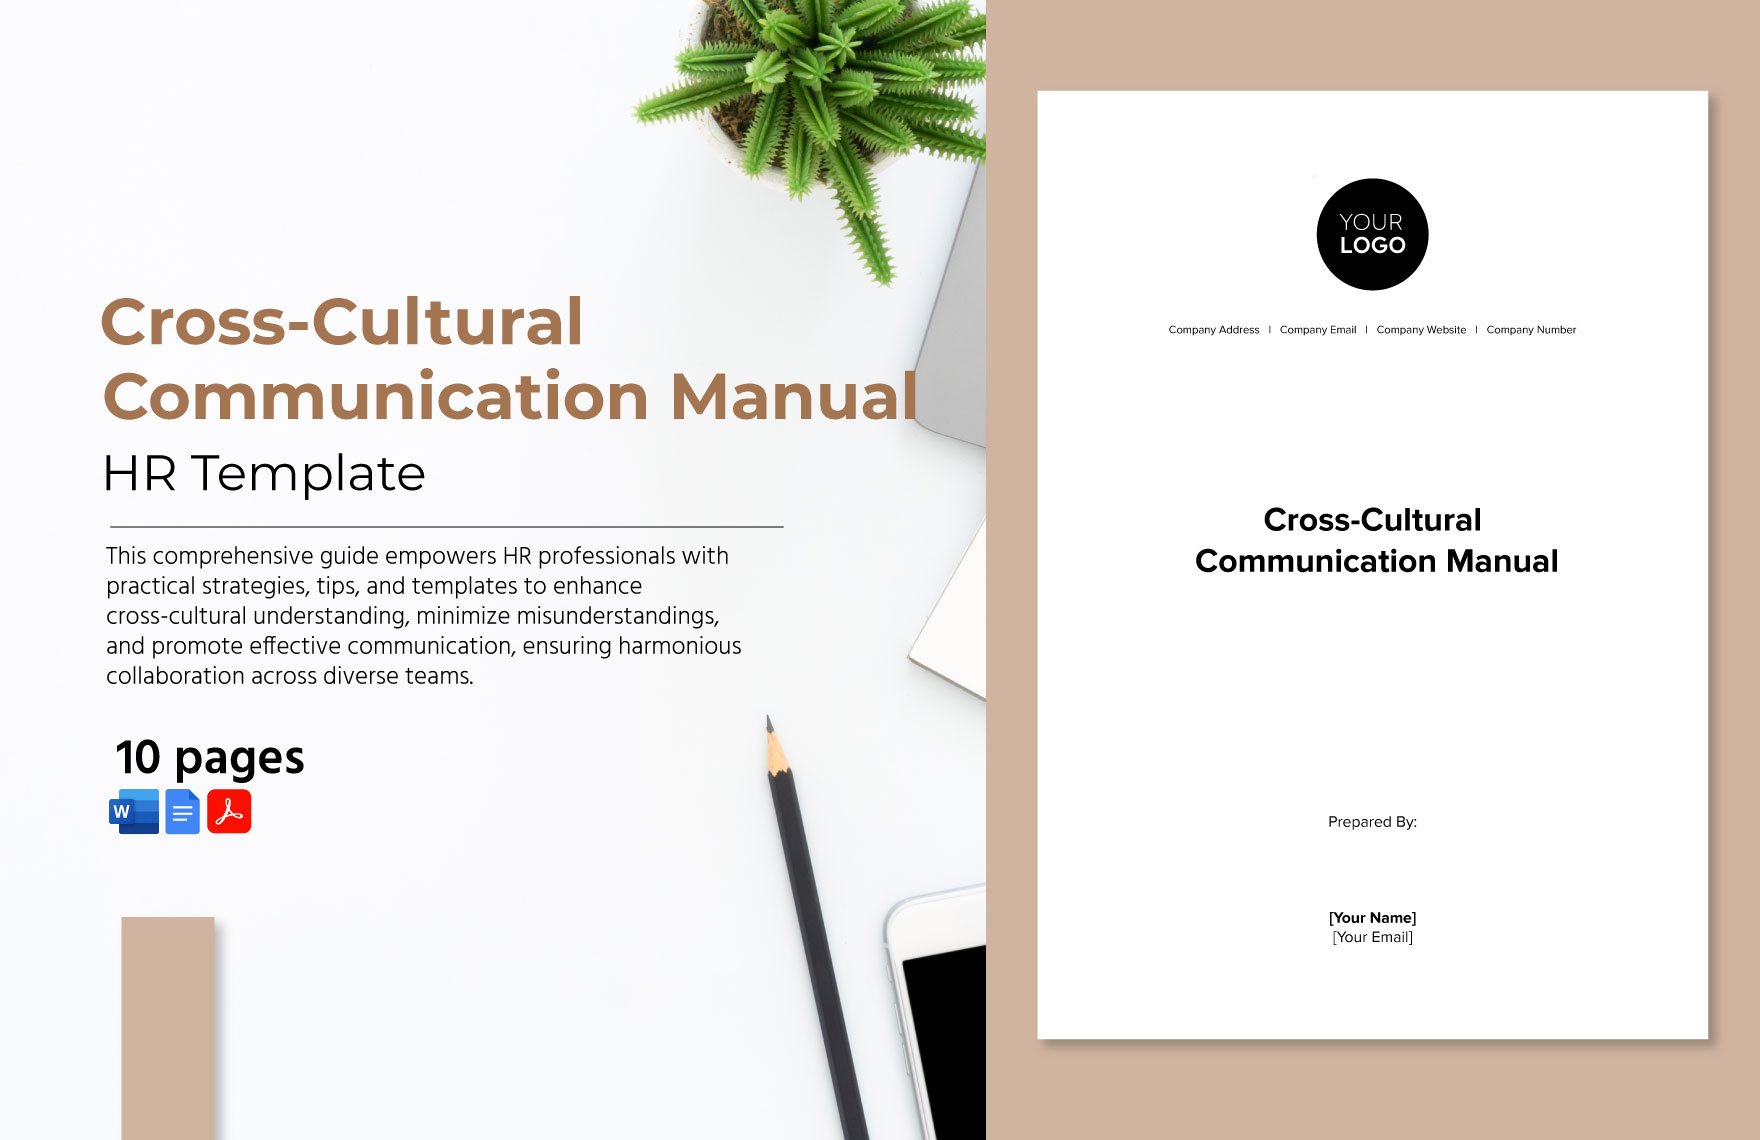 Cross-Cultural Communication Manual HR Template